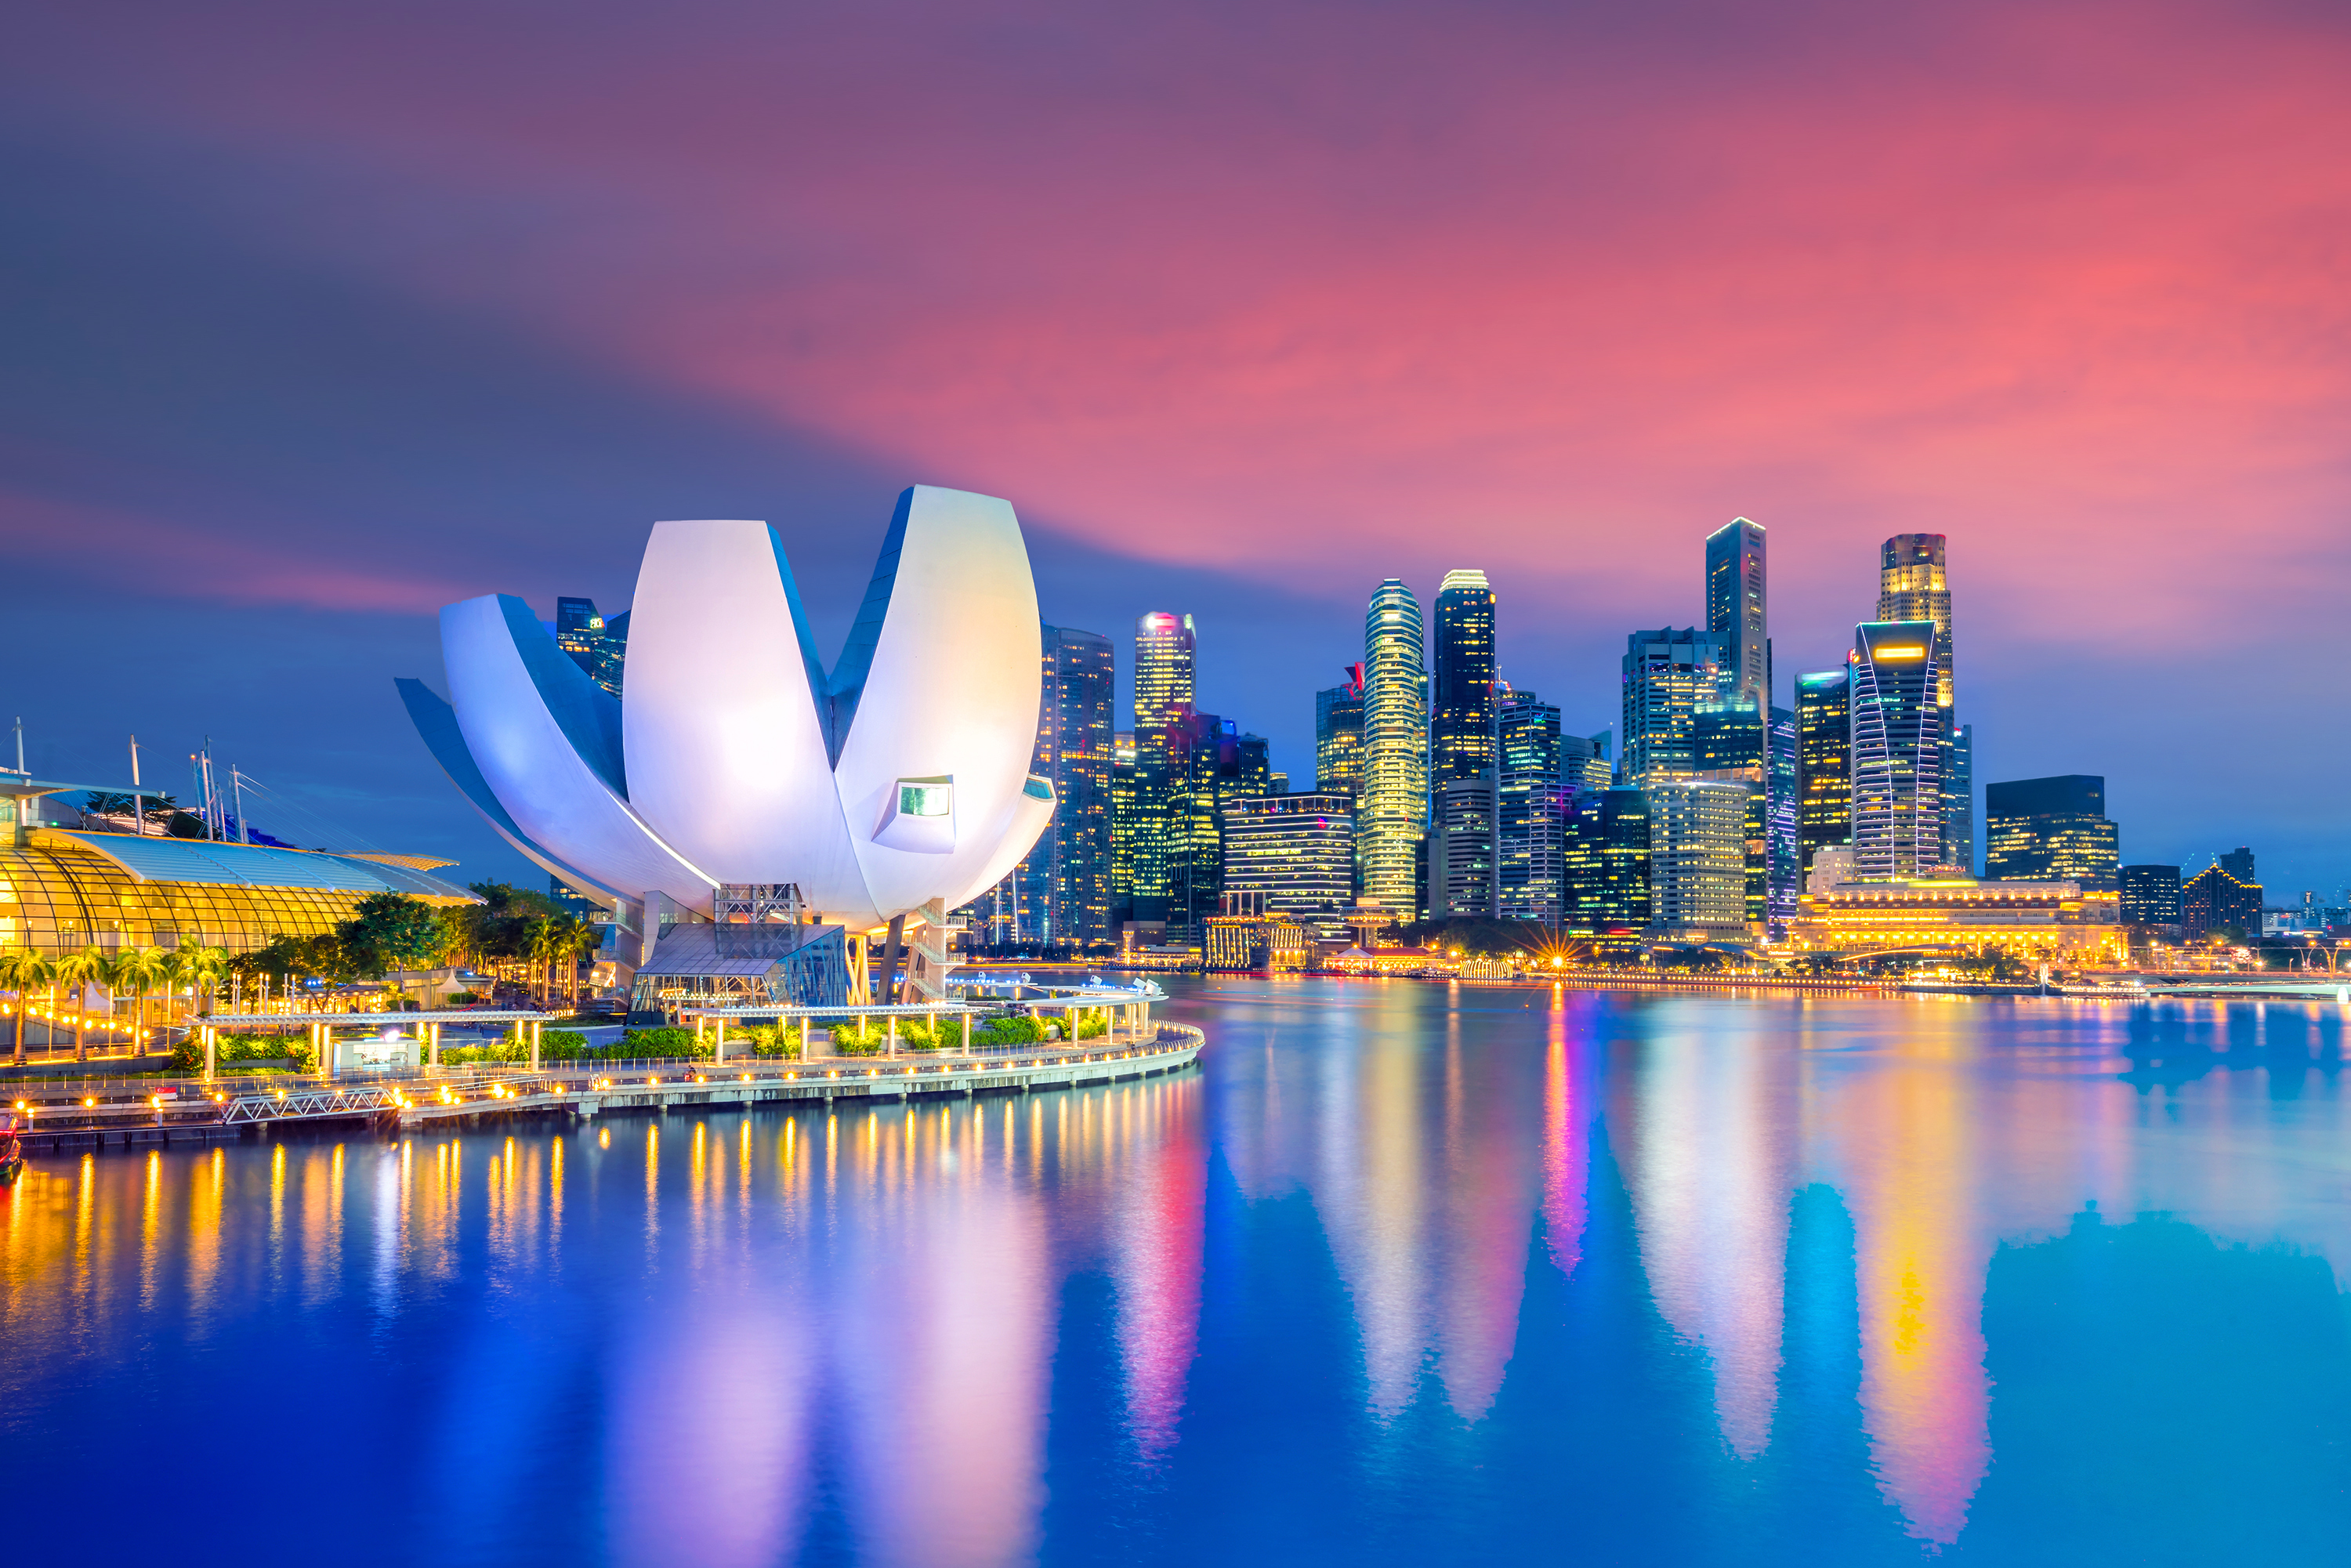 Singapore – The Lion City